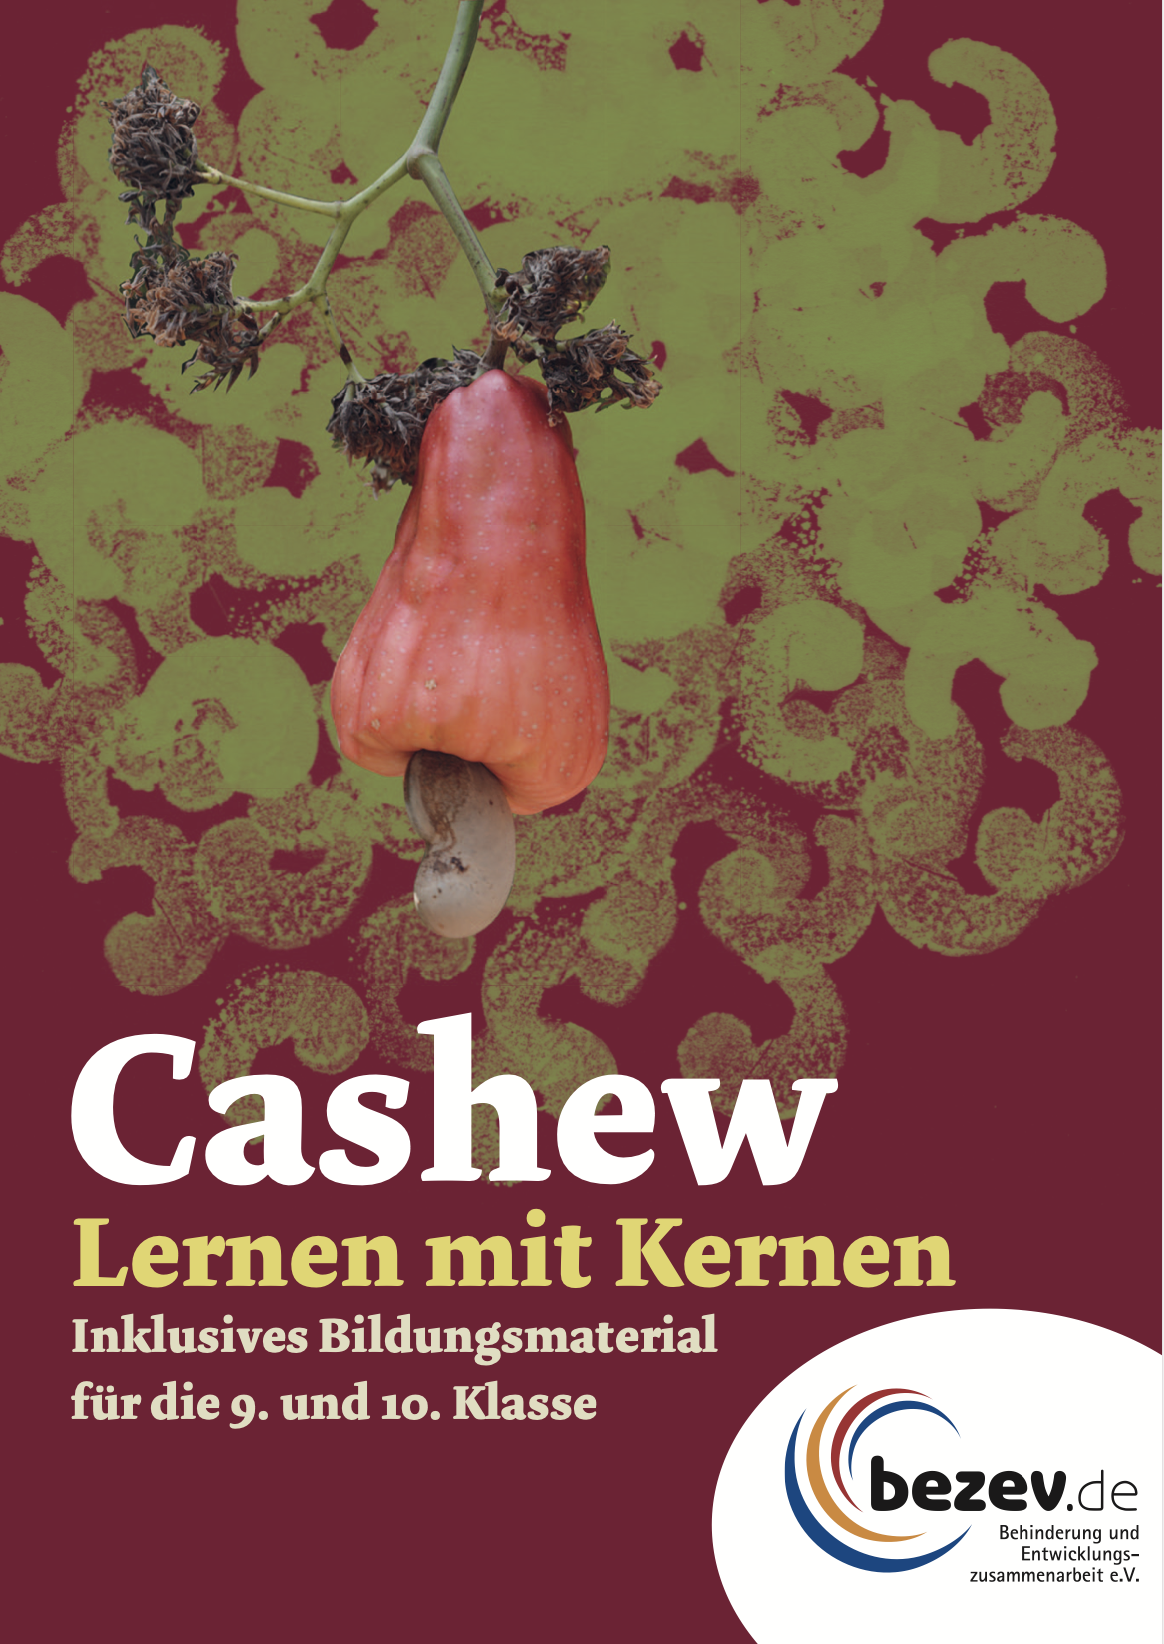 Cashew-Apfel mit Cashew-Nuss